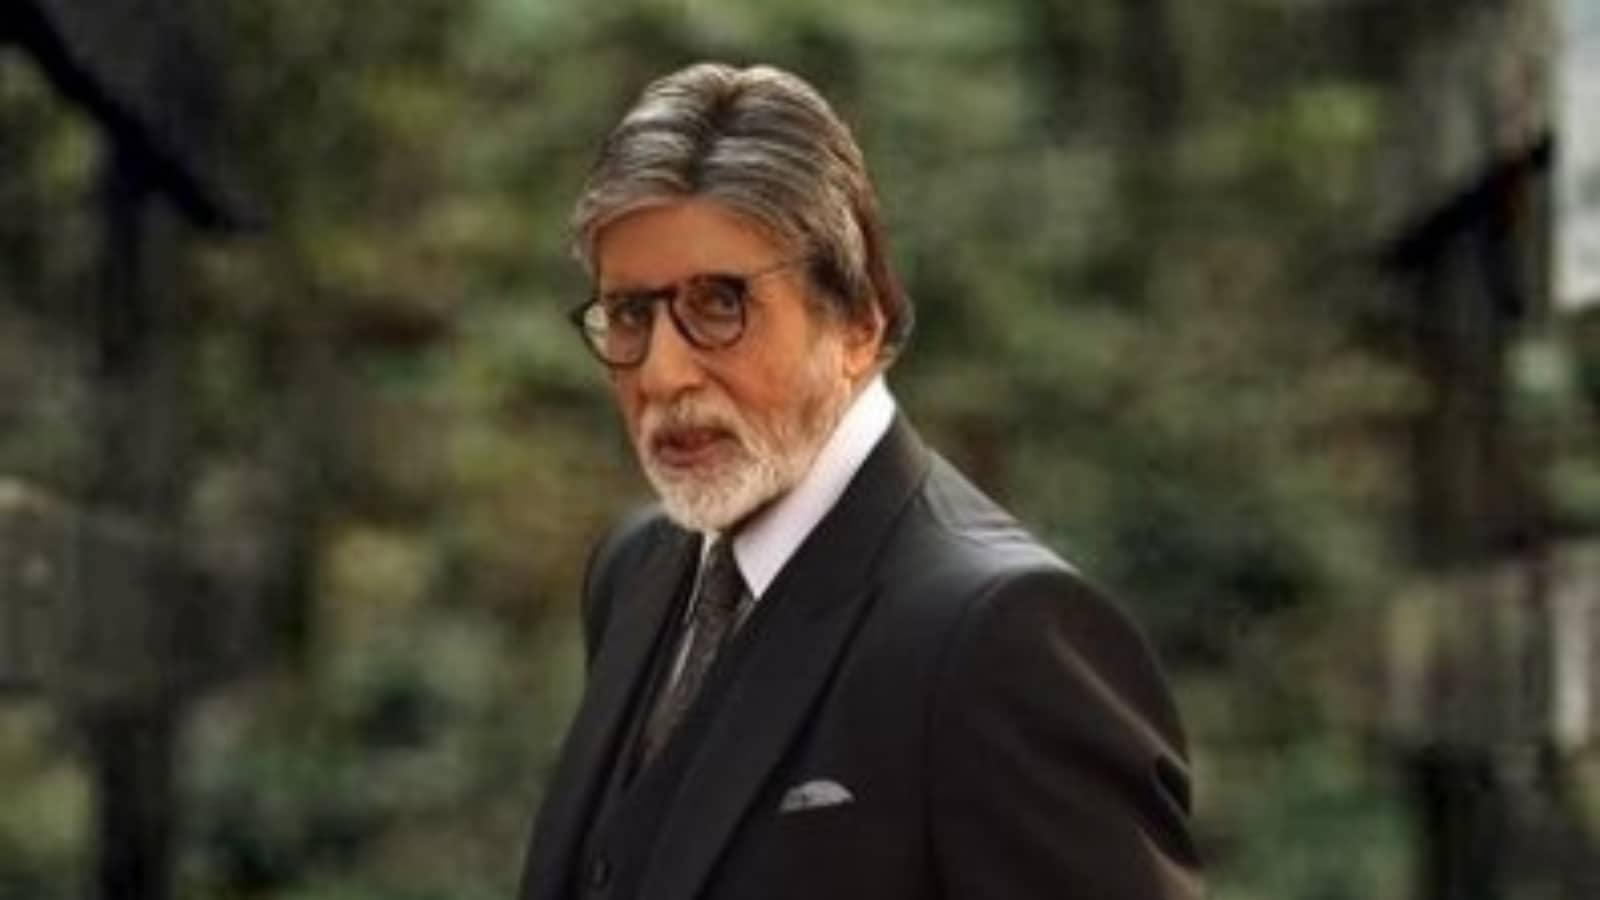 Amitabh Bachchan Feels 'Apprehension, Fears, Doubts' Ahead of Kaun Banega Crorepati's Return